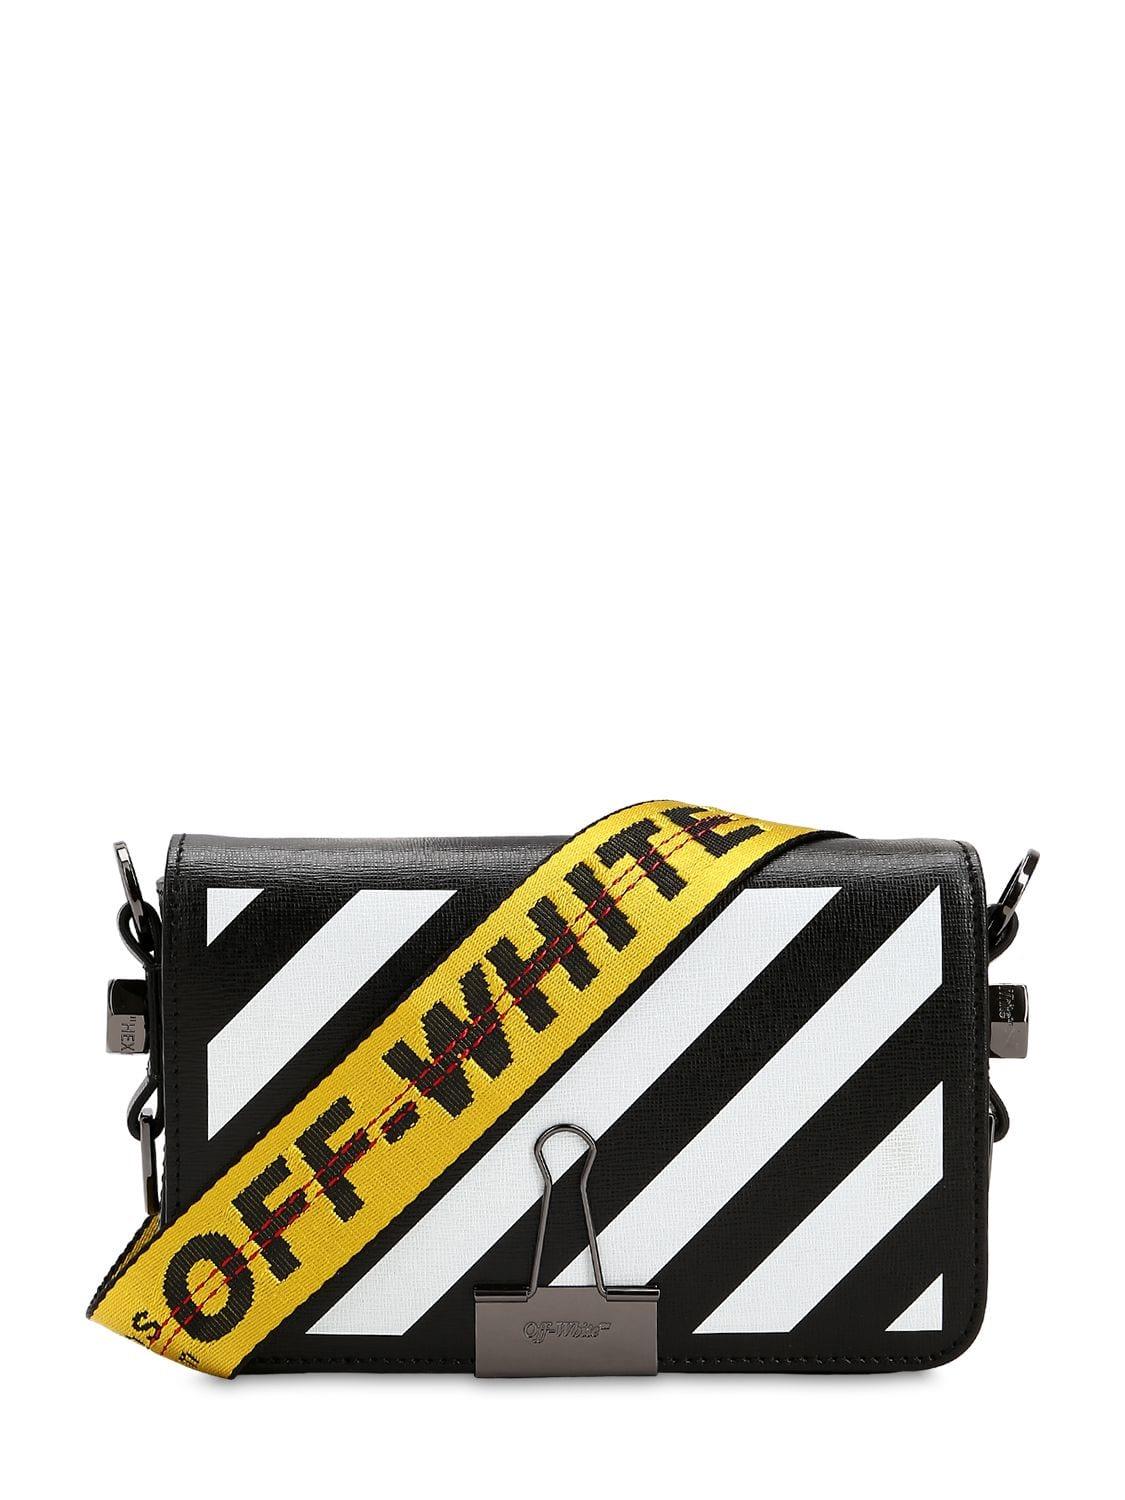 Off White Caution Logo - LogoDix